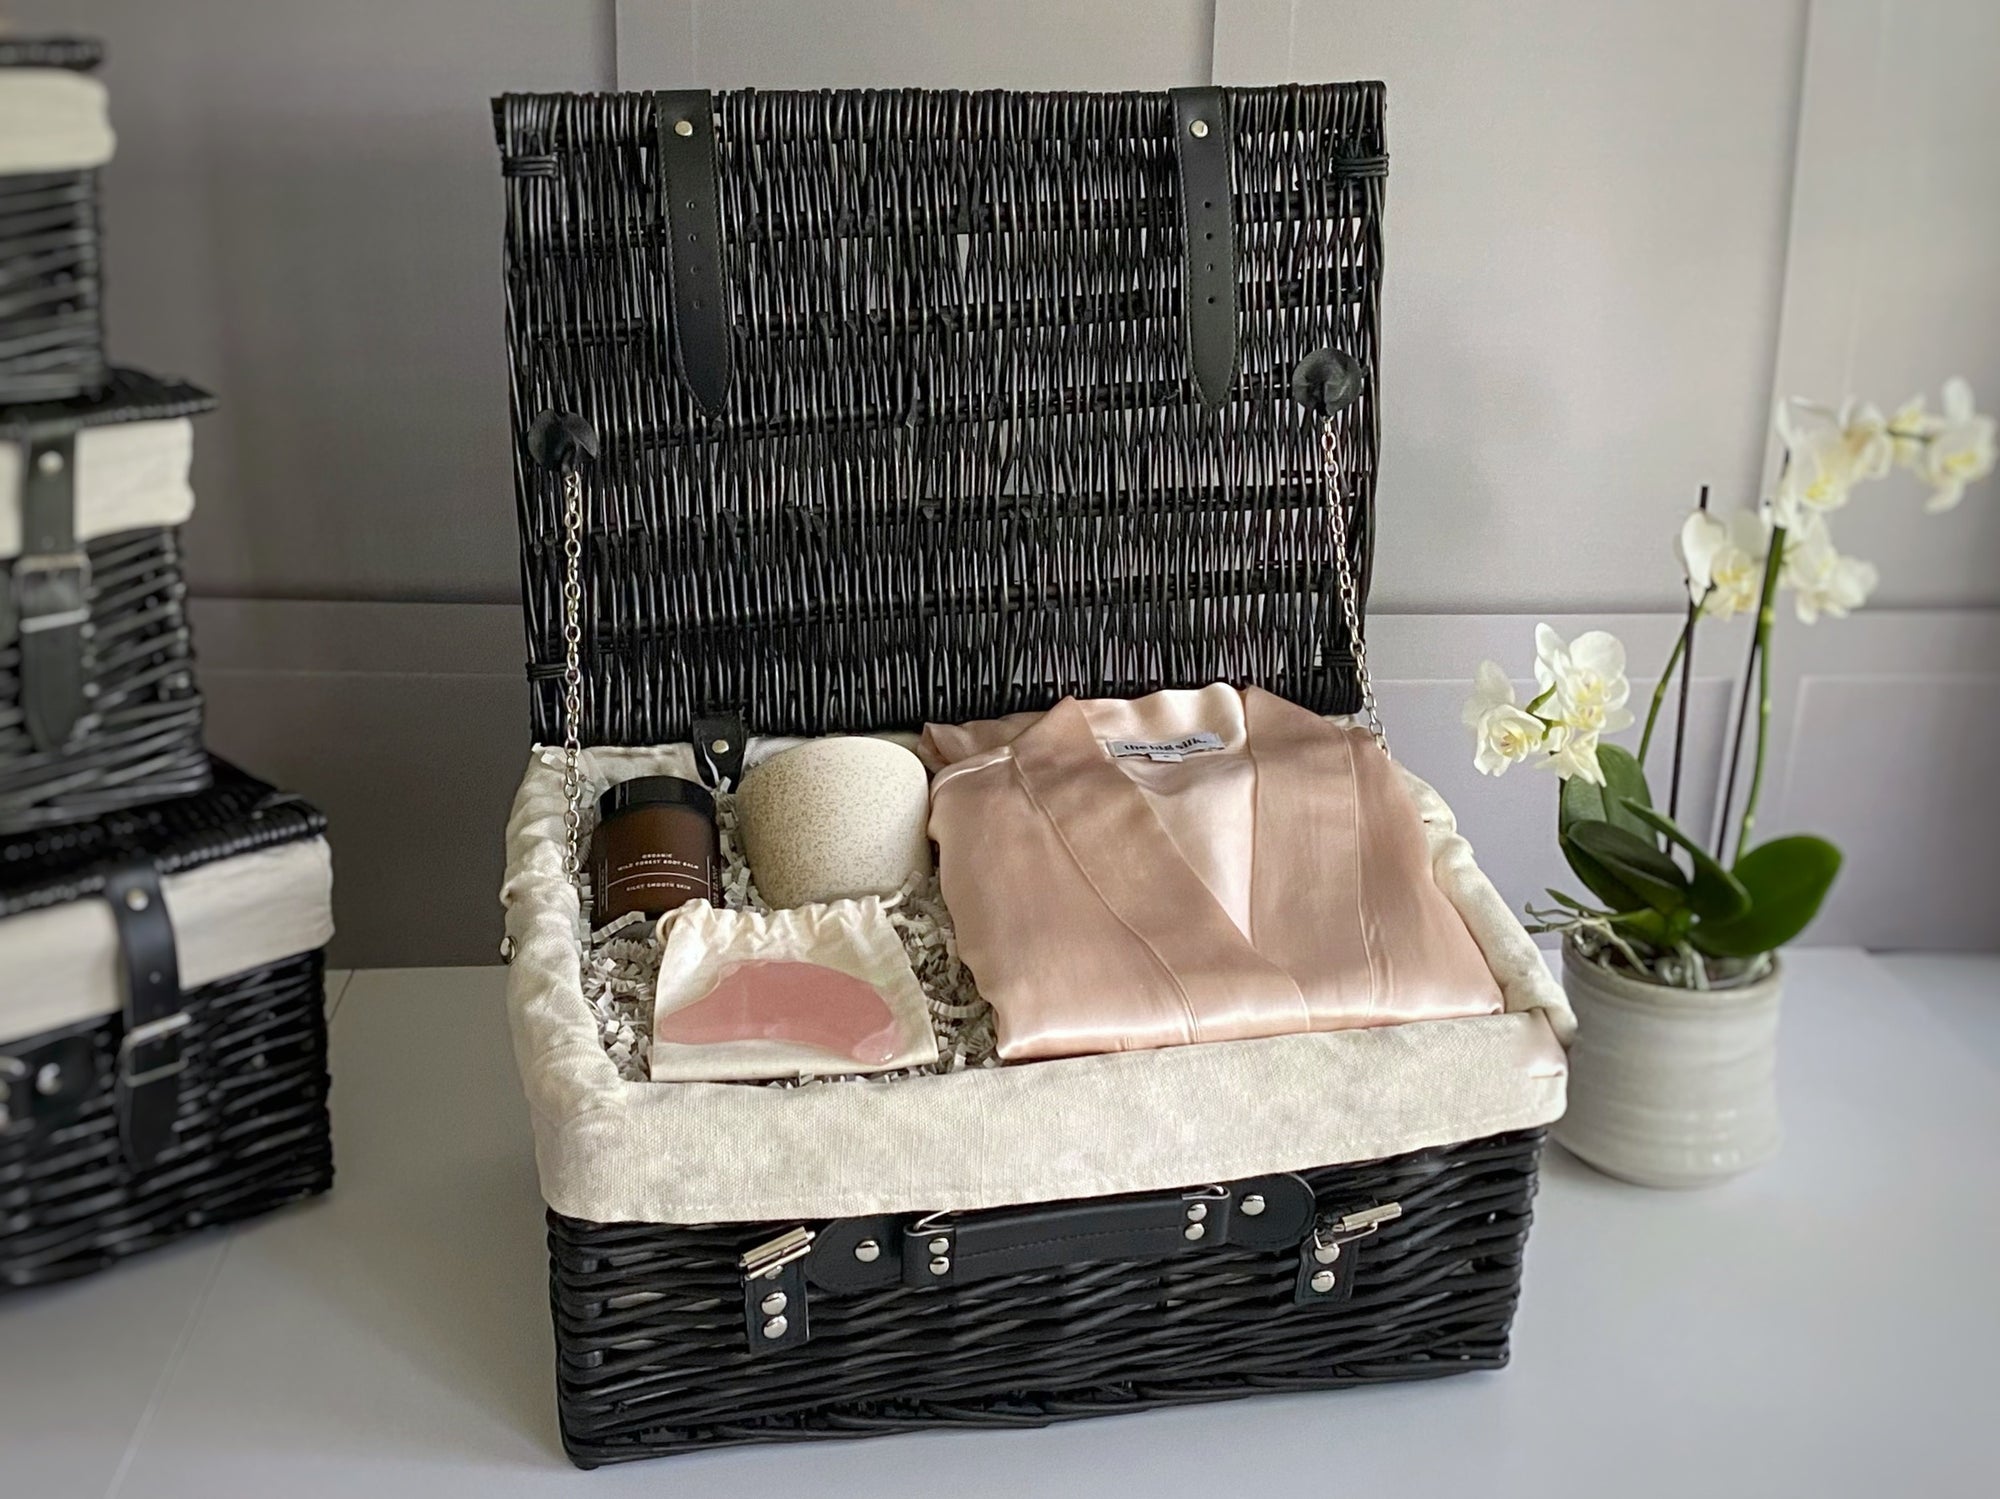 Premium luxury pamper hamper basket with silk robe gown rose quartz gua sha body balm and candle